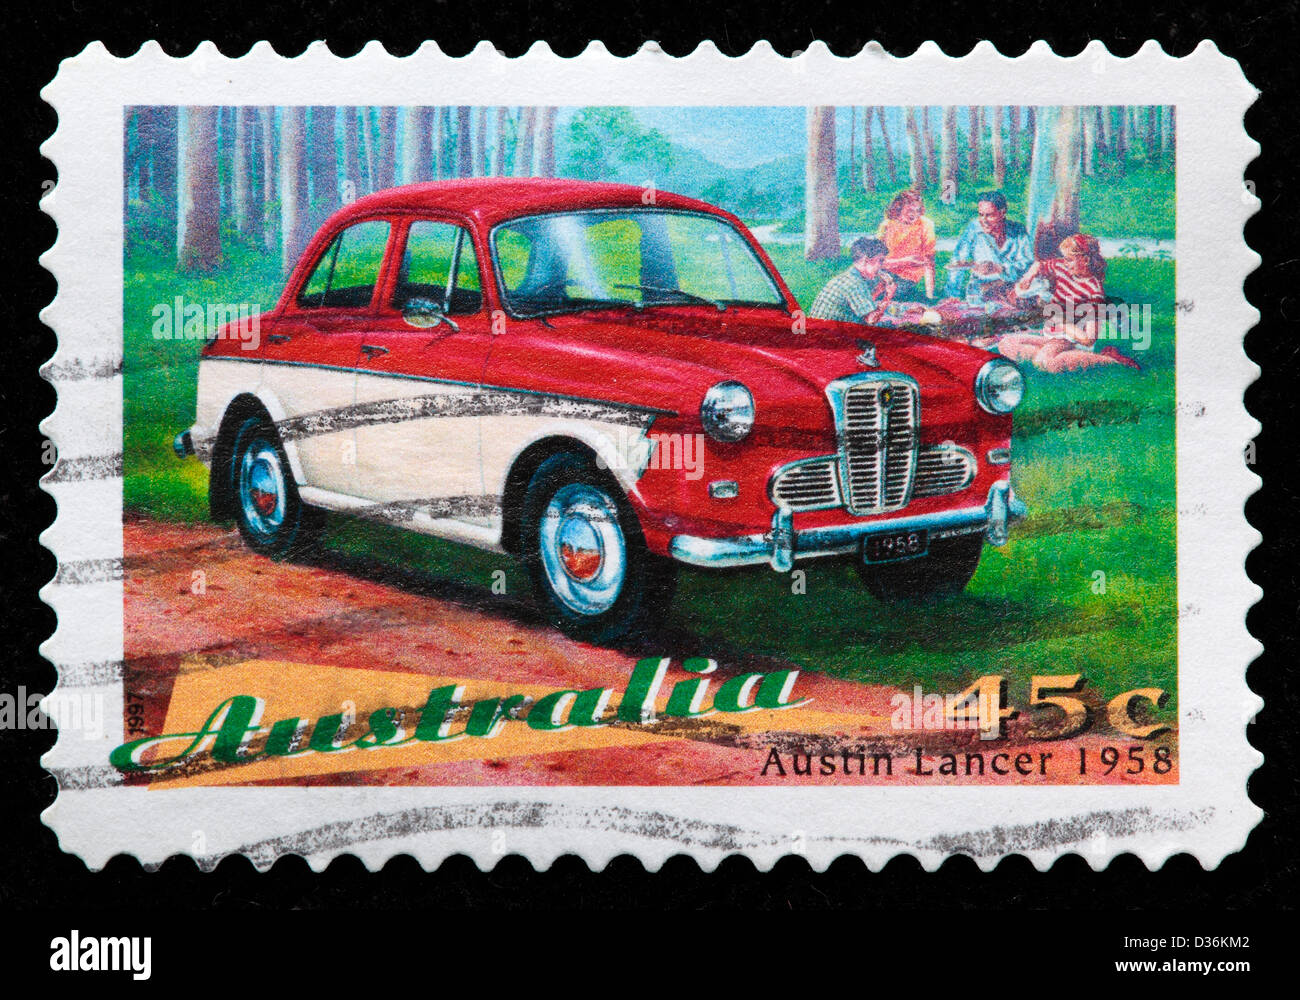 Austin Lancer (1958), Vintage car, postage stamp, Australia, 1997 Stock Photo